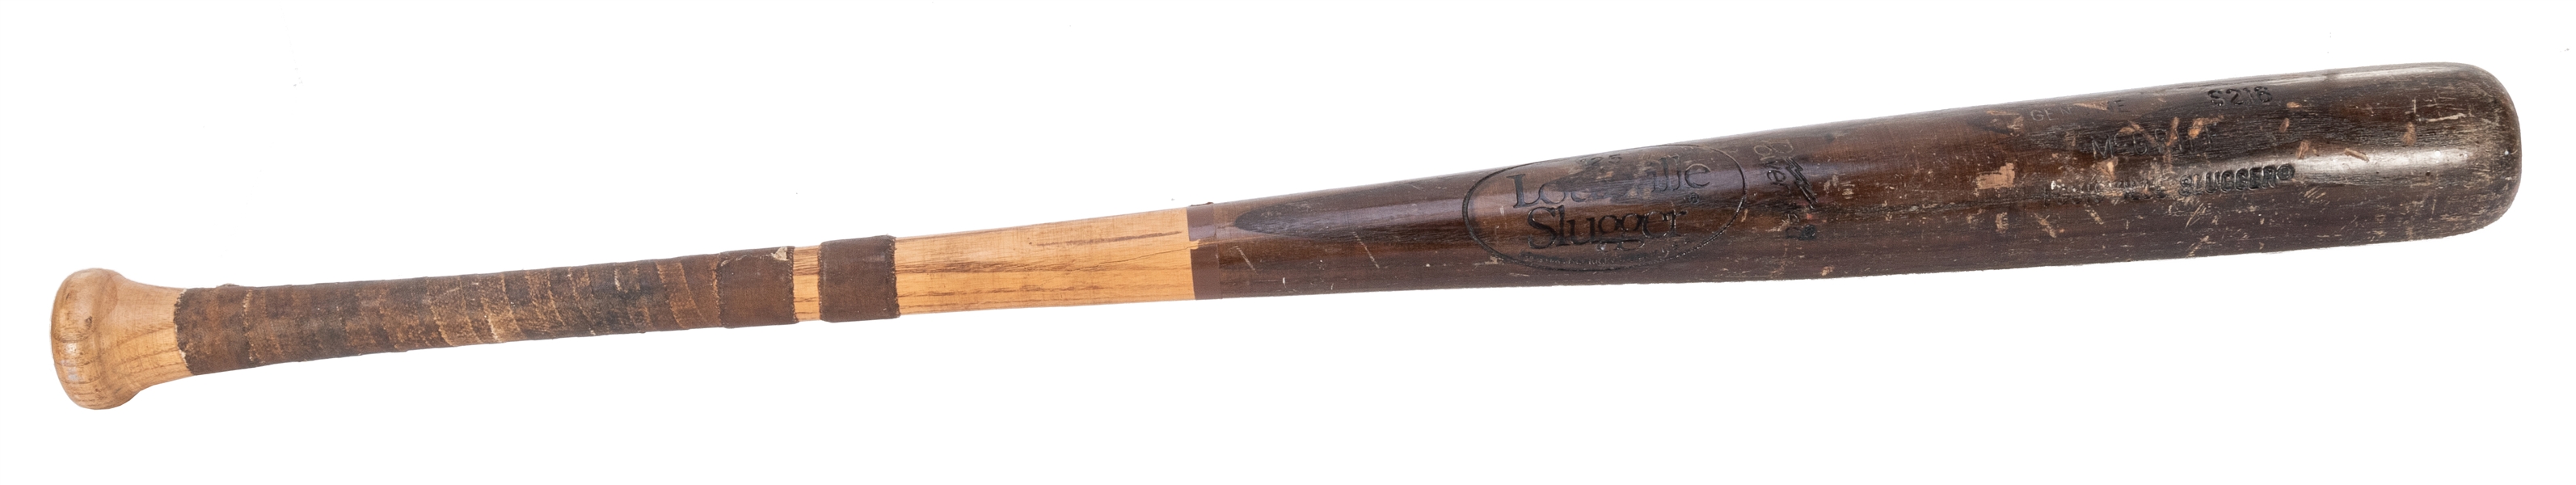  Fred McGriff Game Used Baseball Bat. Louisville Slugger S21...